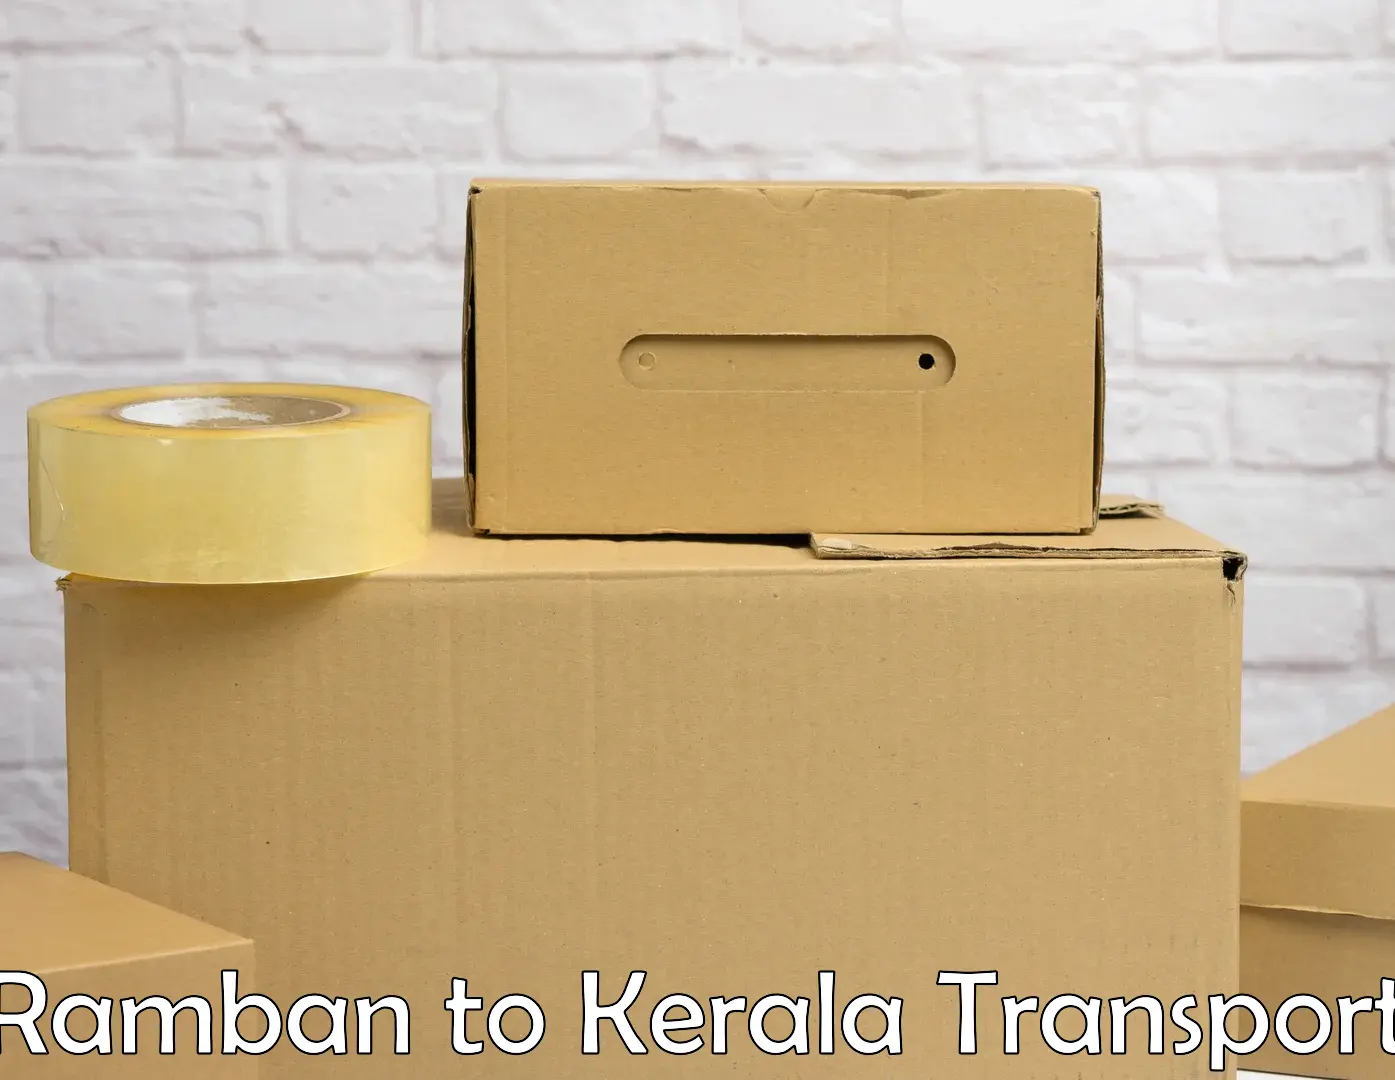 Truck transport companies in India Ramban to Kochi